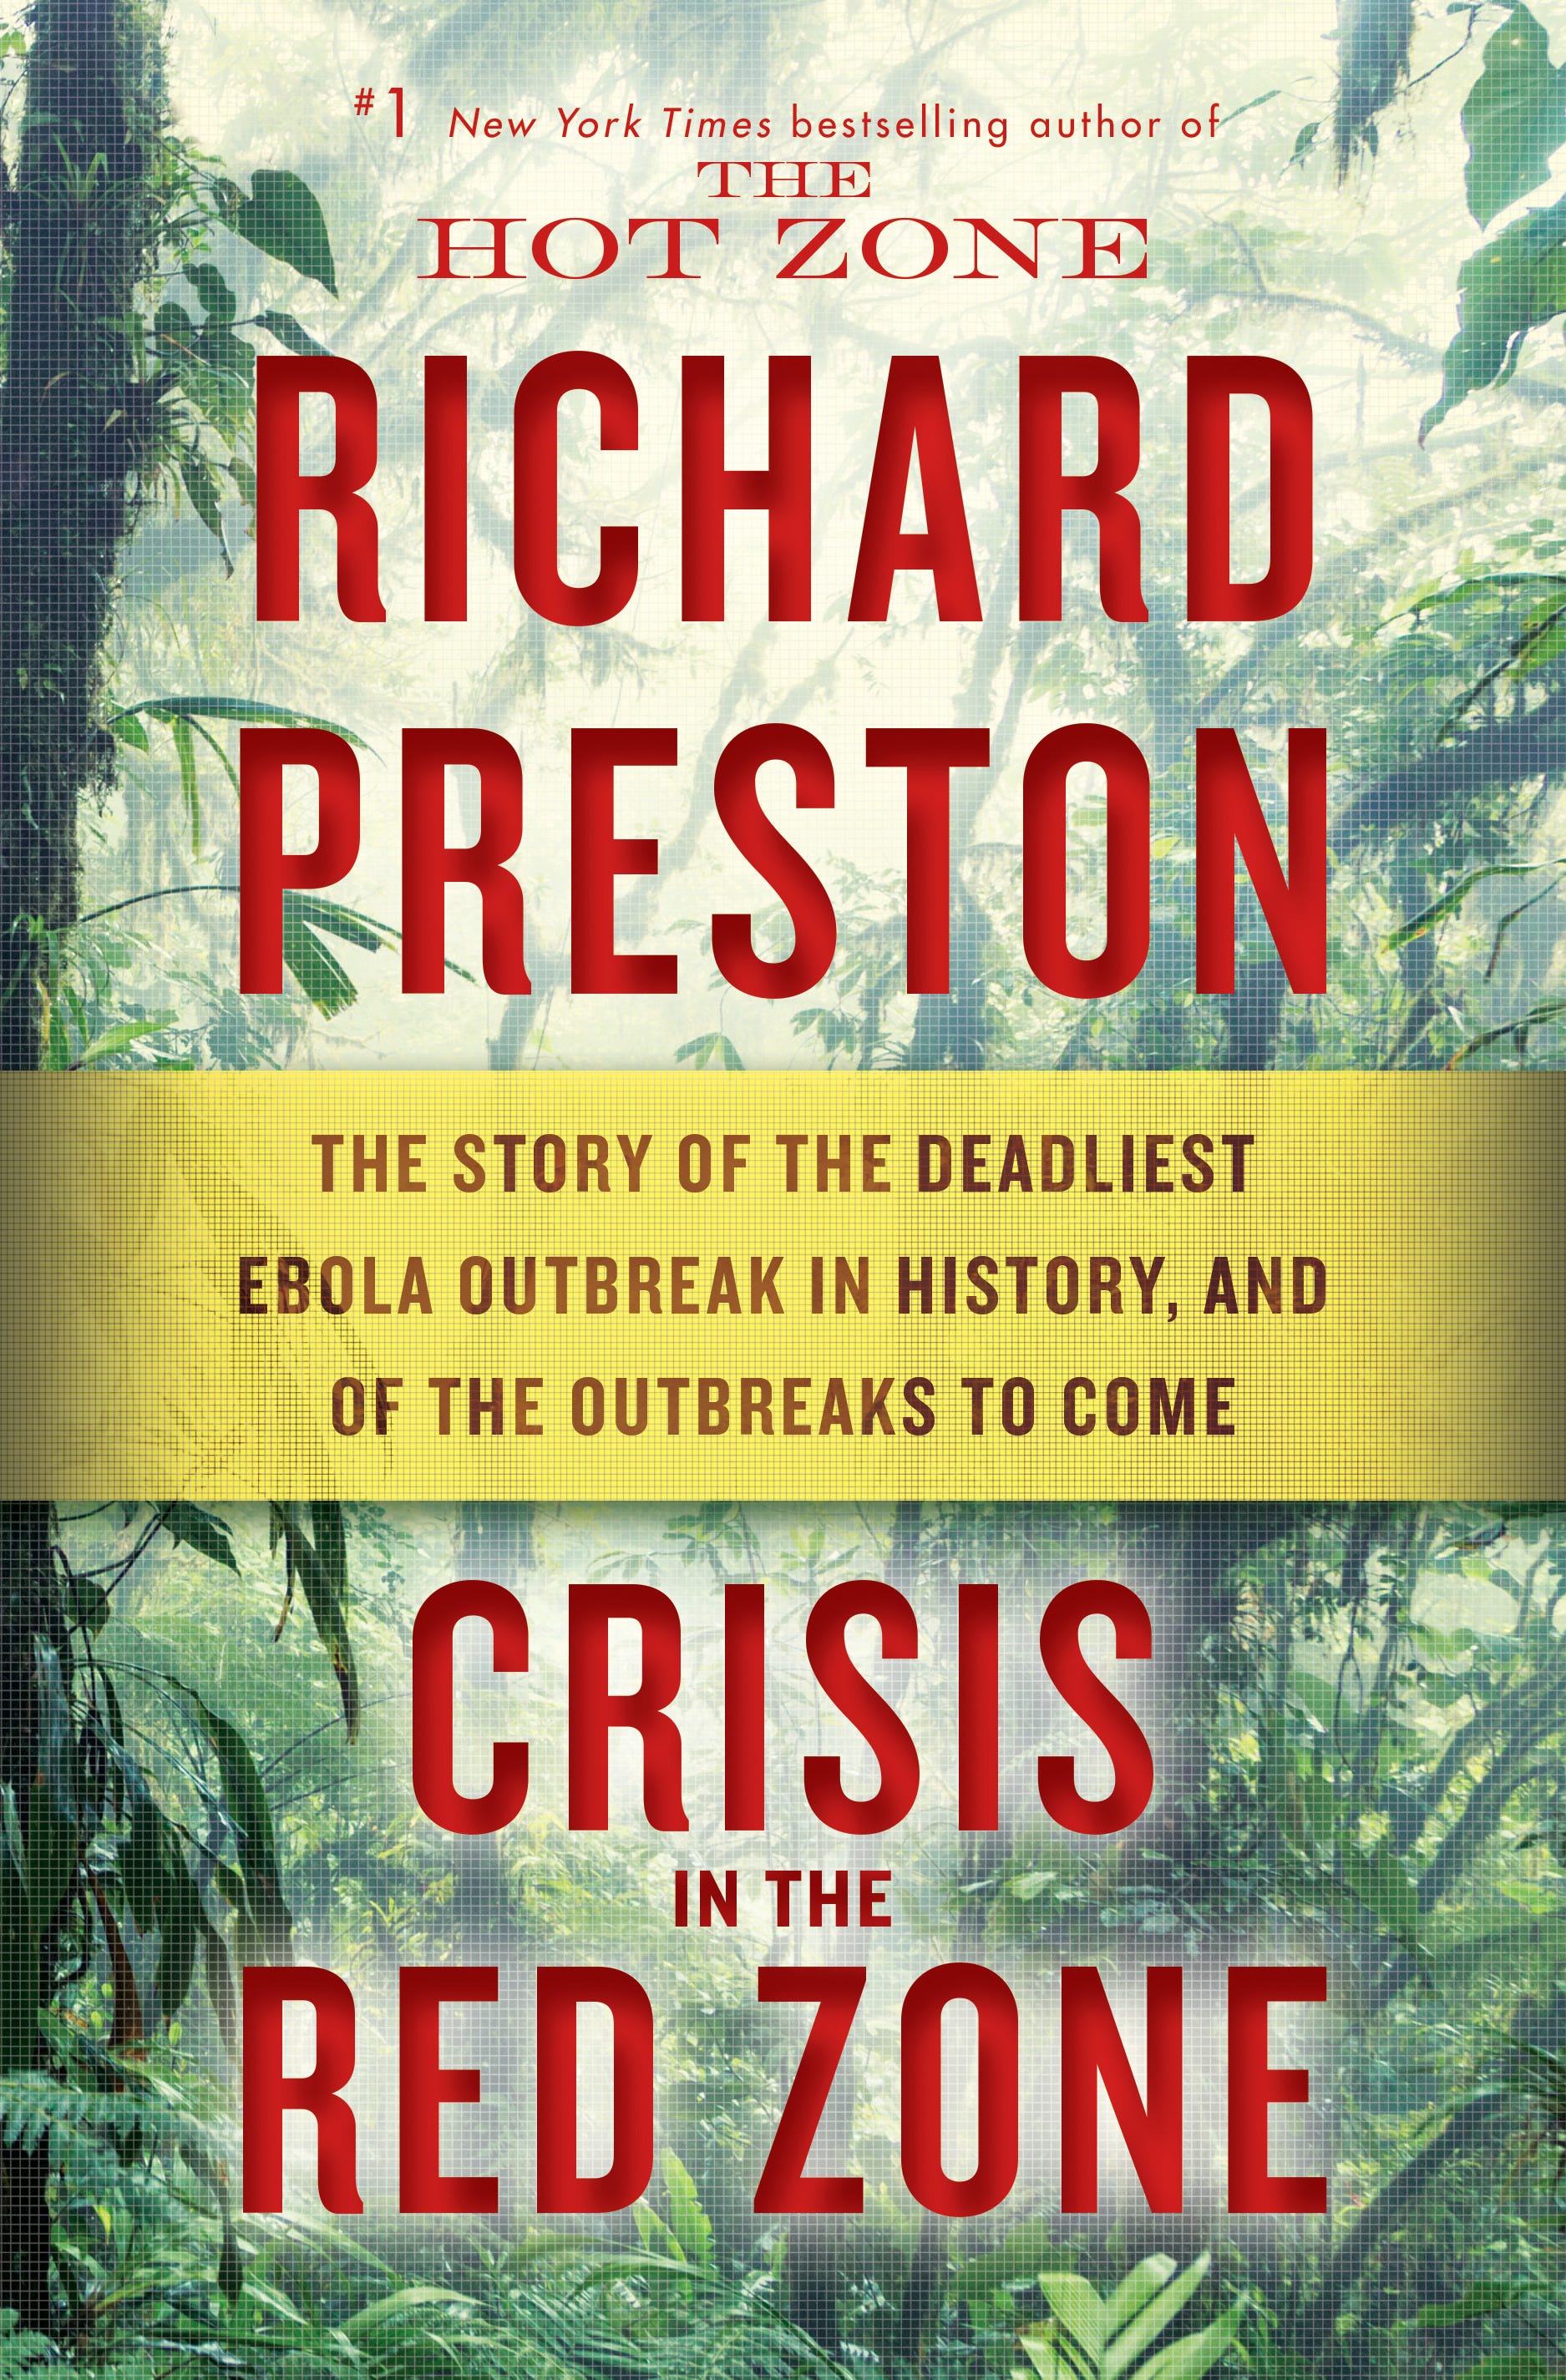 Richard Preston revisits Ebola virus in 'Crisis in the Red Zone'